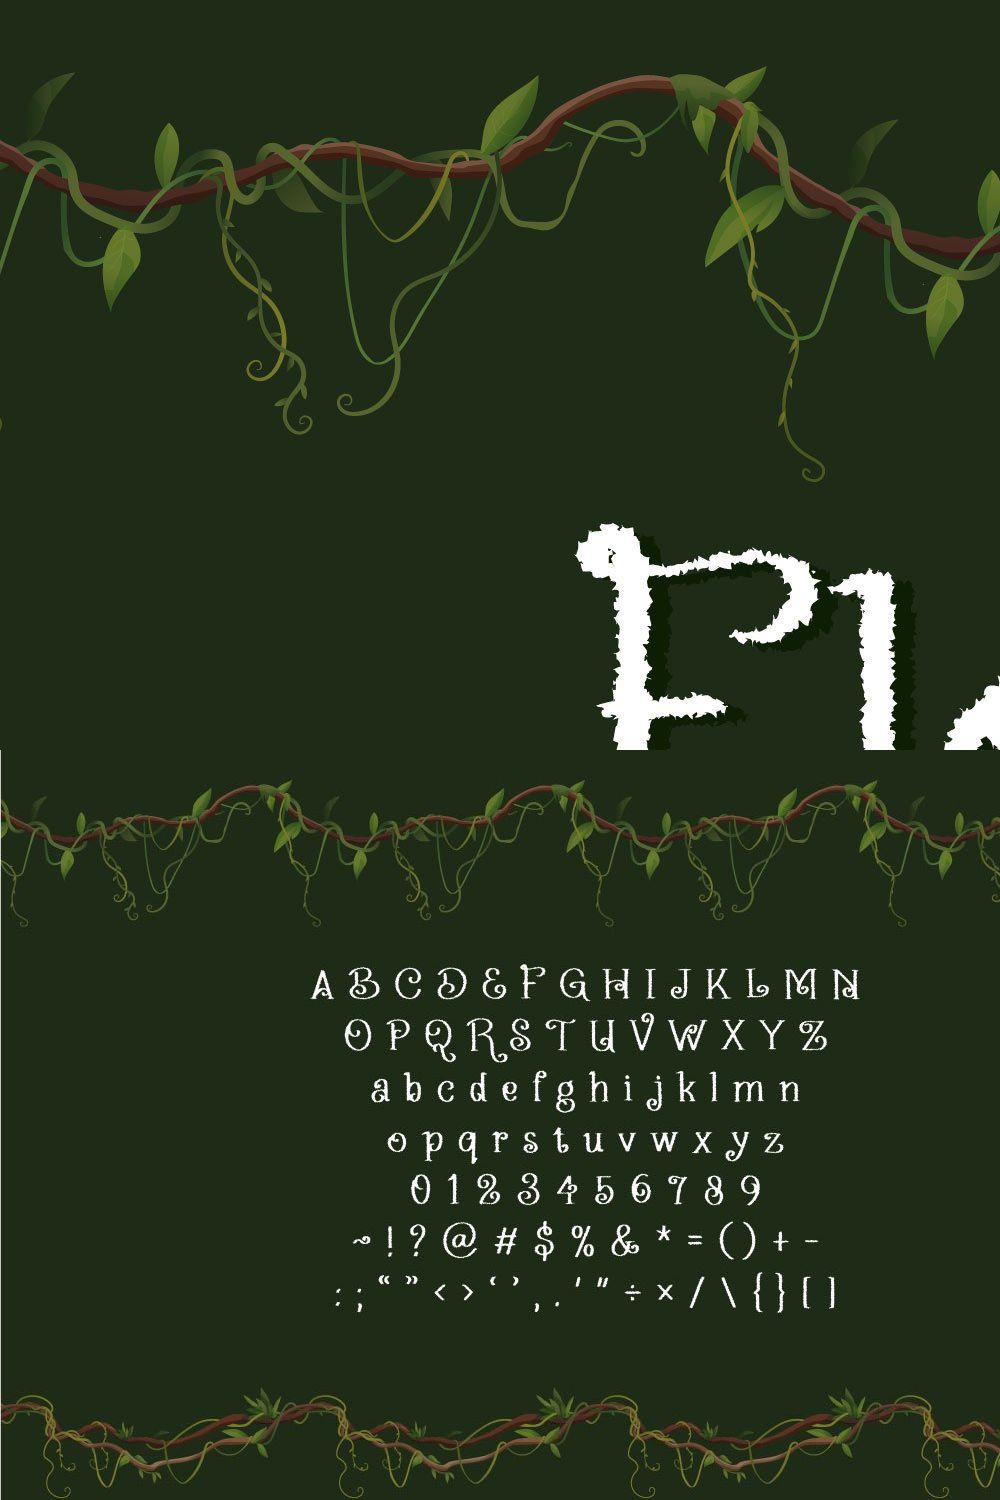 Floryn - Decorative Fantasy Font pinterest preview image.